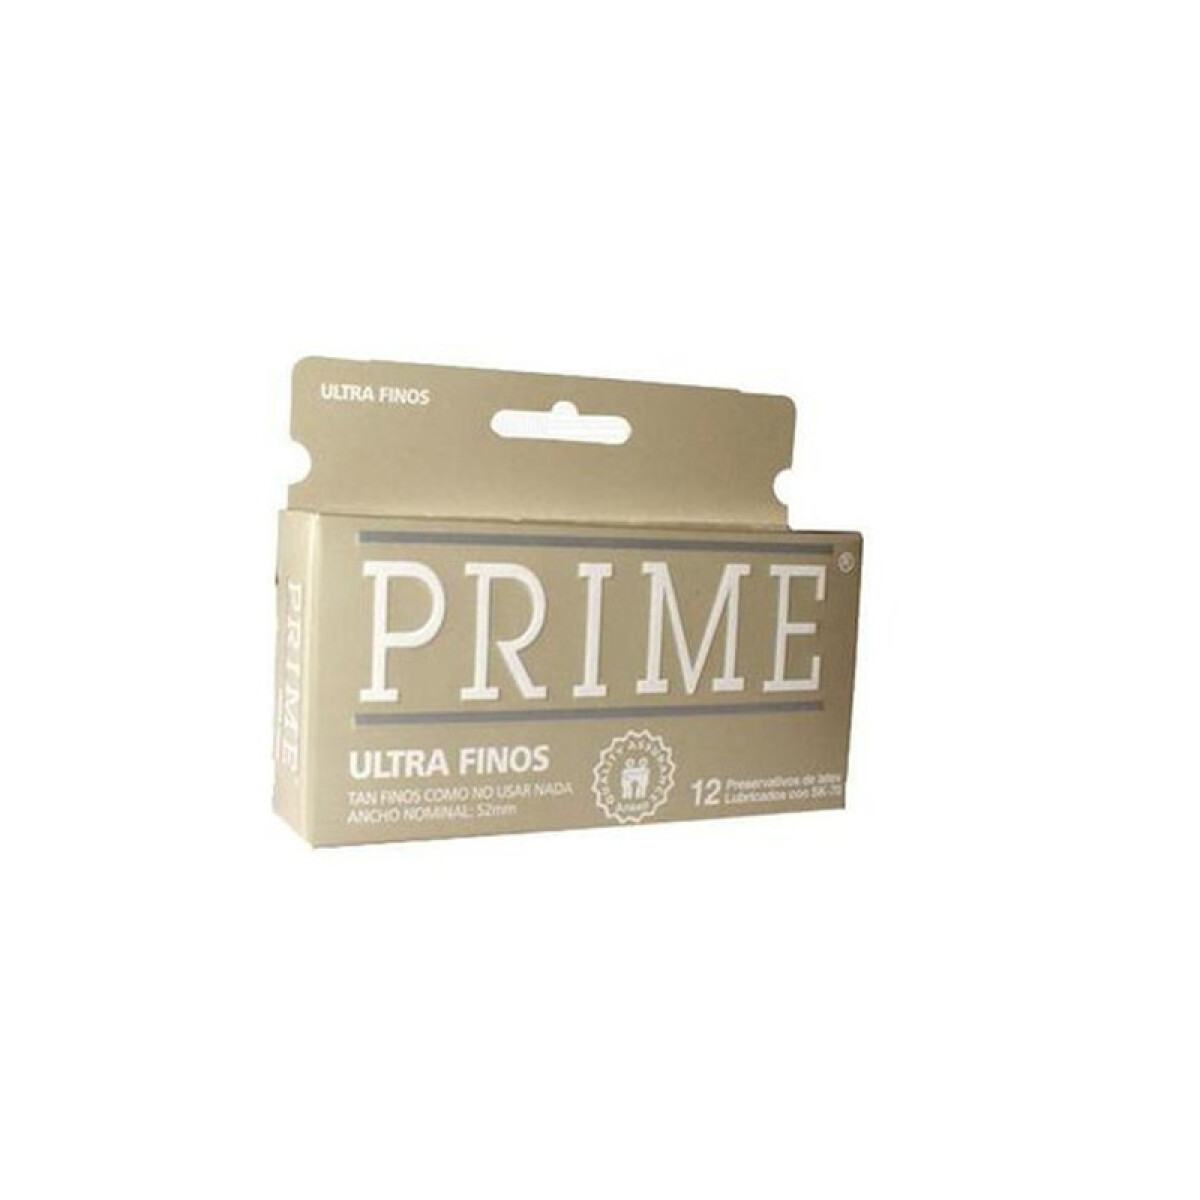 Preservativo PRIME (cajita x12u ) - Ultra finos 